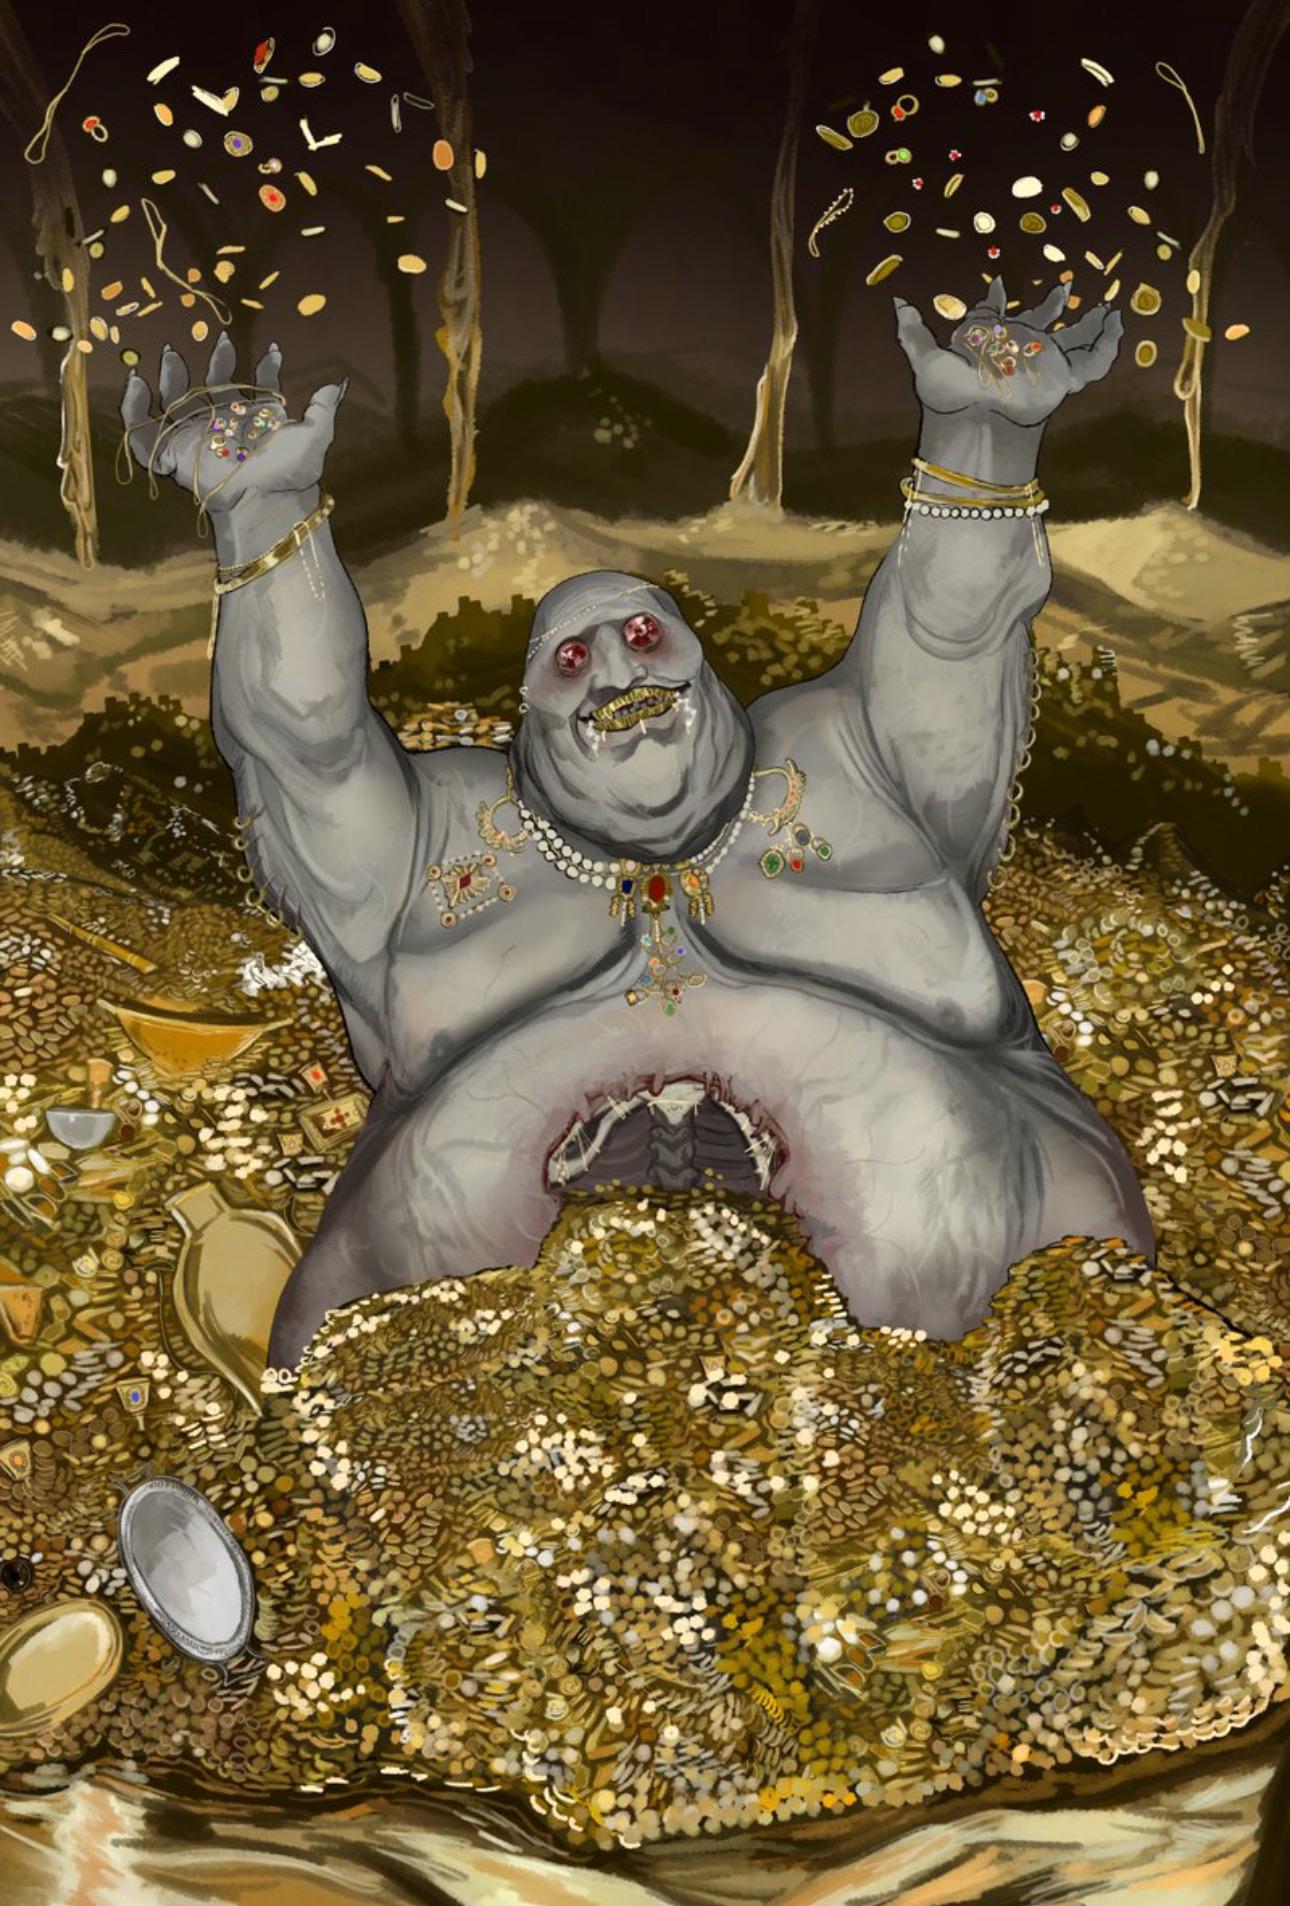 r/ImaginaryWarhammer - The cruel chaos god of greed by 101ho